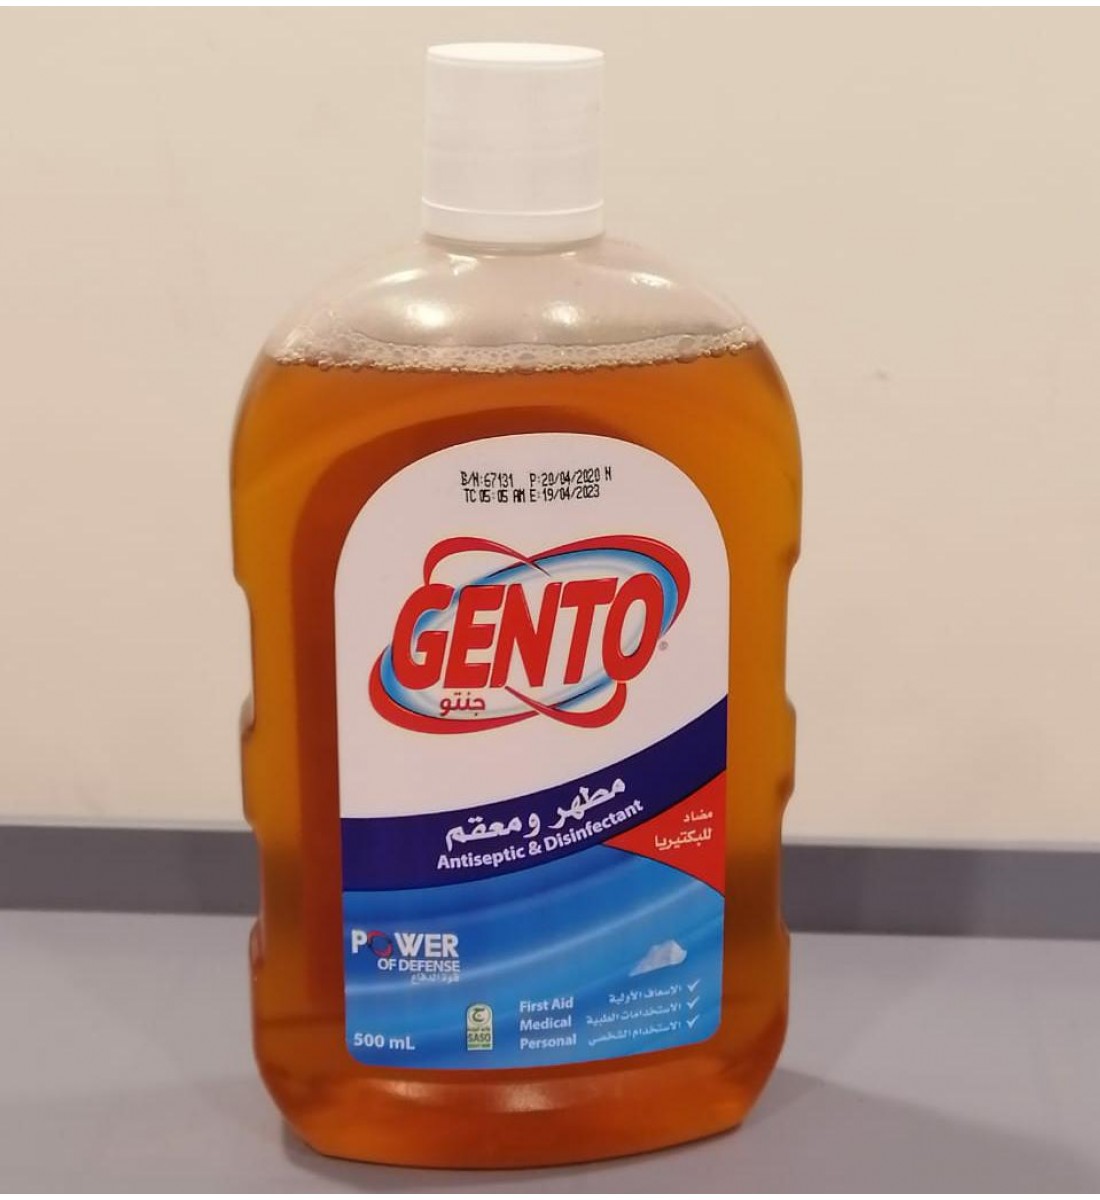 Gentoo Antiseptic and Sanitizer (500ml)